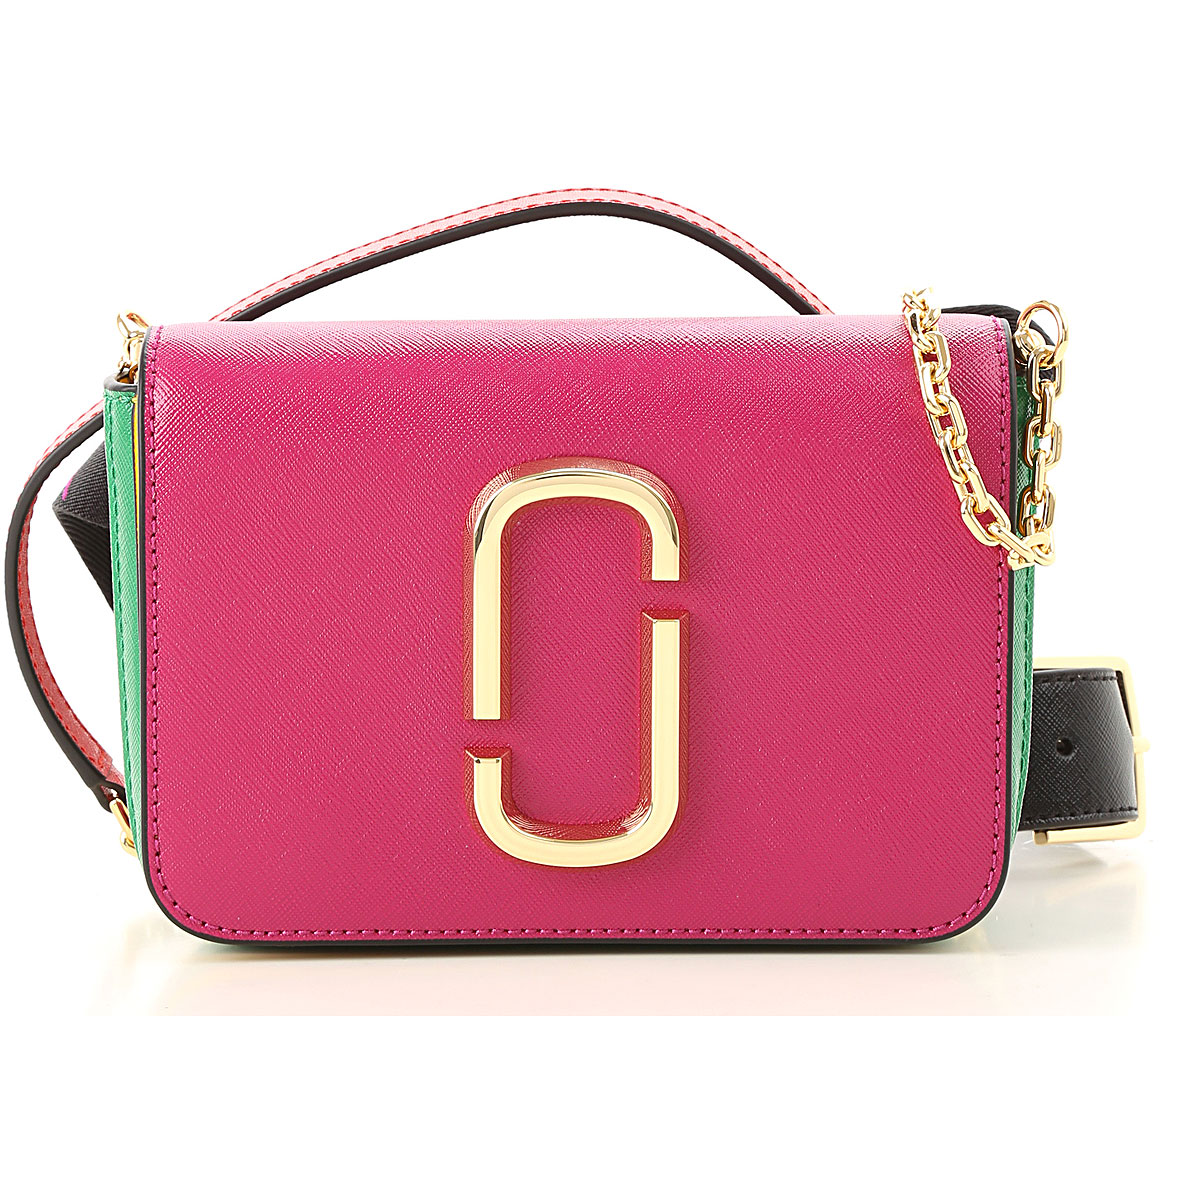 Handbags Marc Jacobs, Style code: m0014102-662-